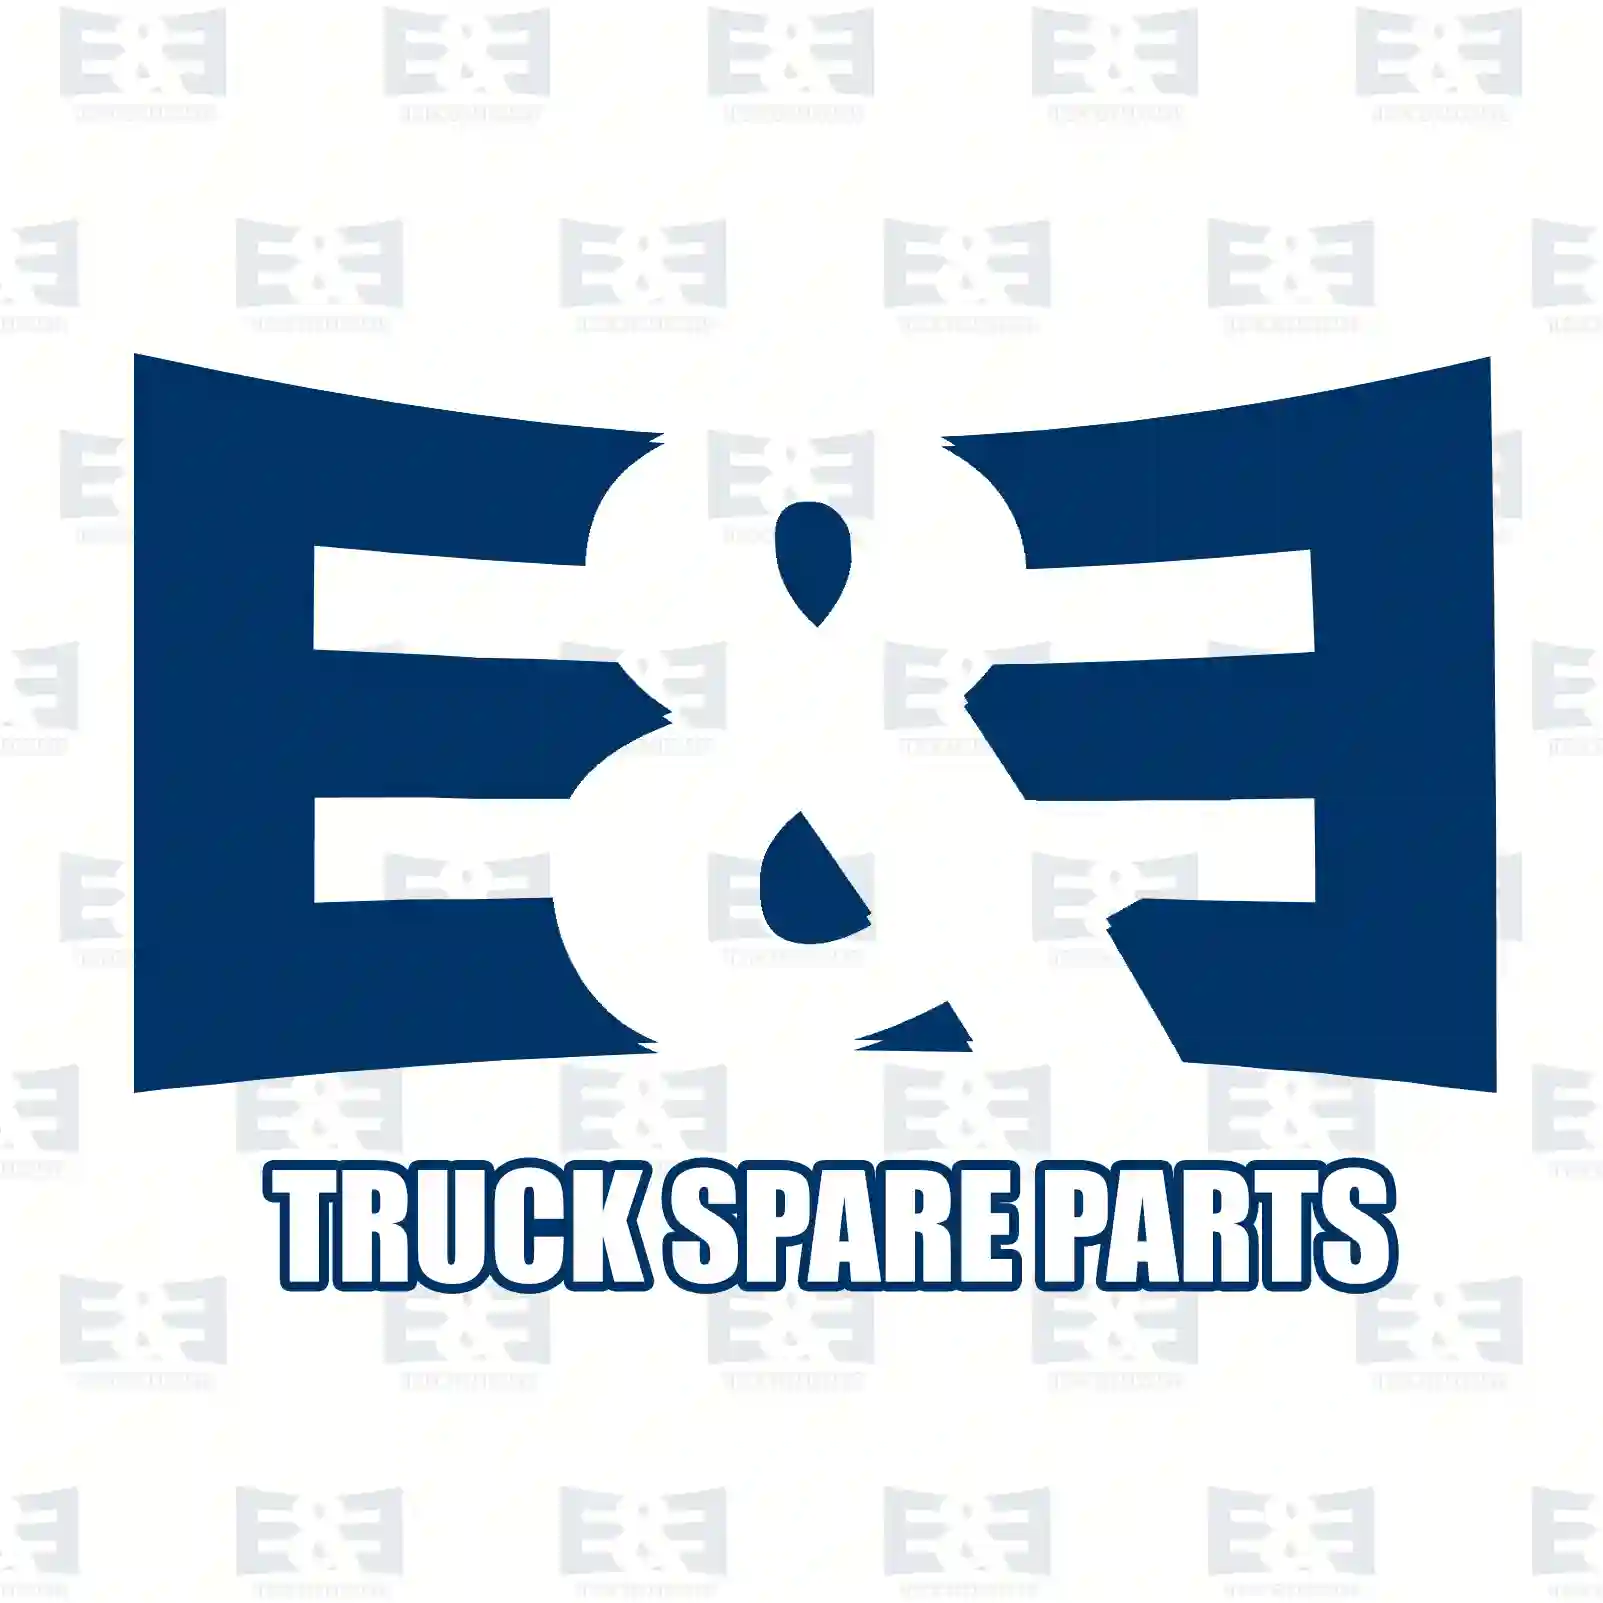 Spring Bracket Hollow spring, EE No 2E2283506 ,  oem no:7422561479, 22561 E&E Truck Spare Parts | Truck Spare Parts, Auotomotive Spare Parts